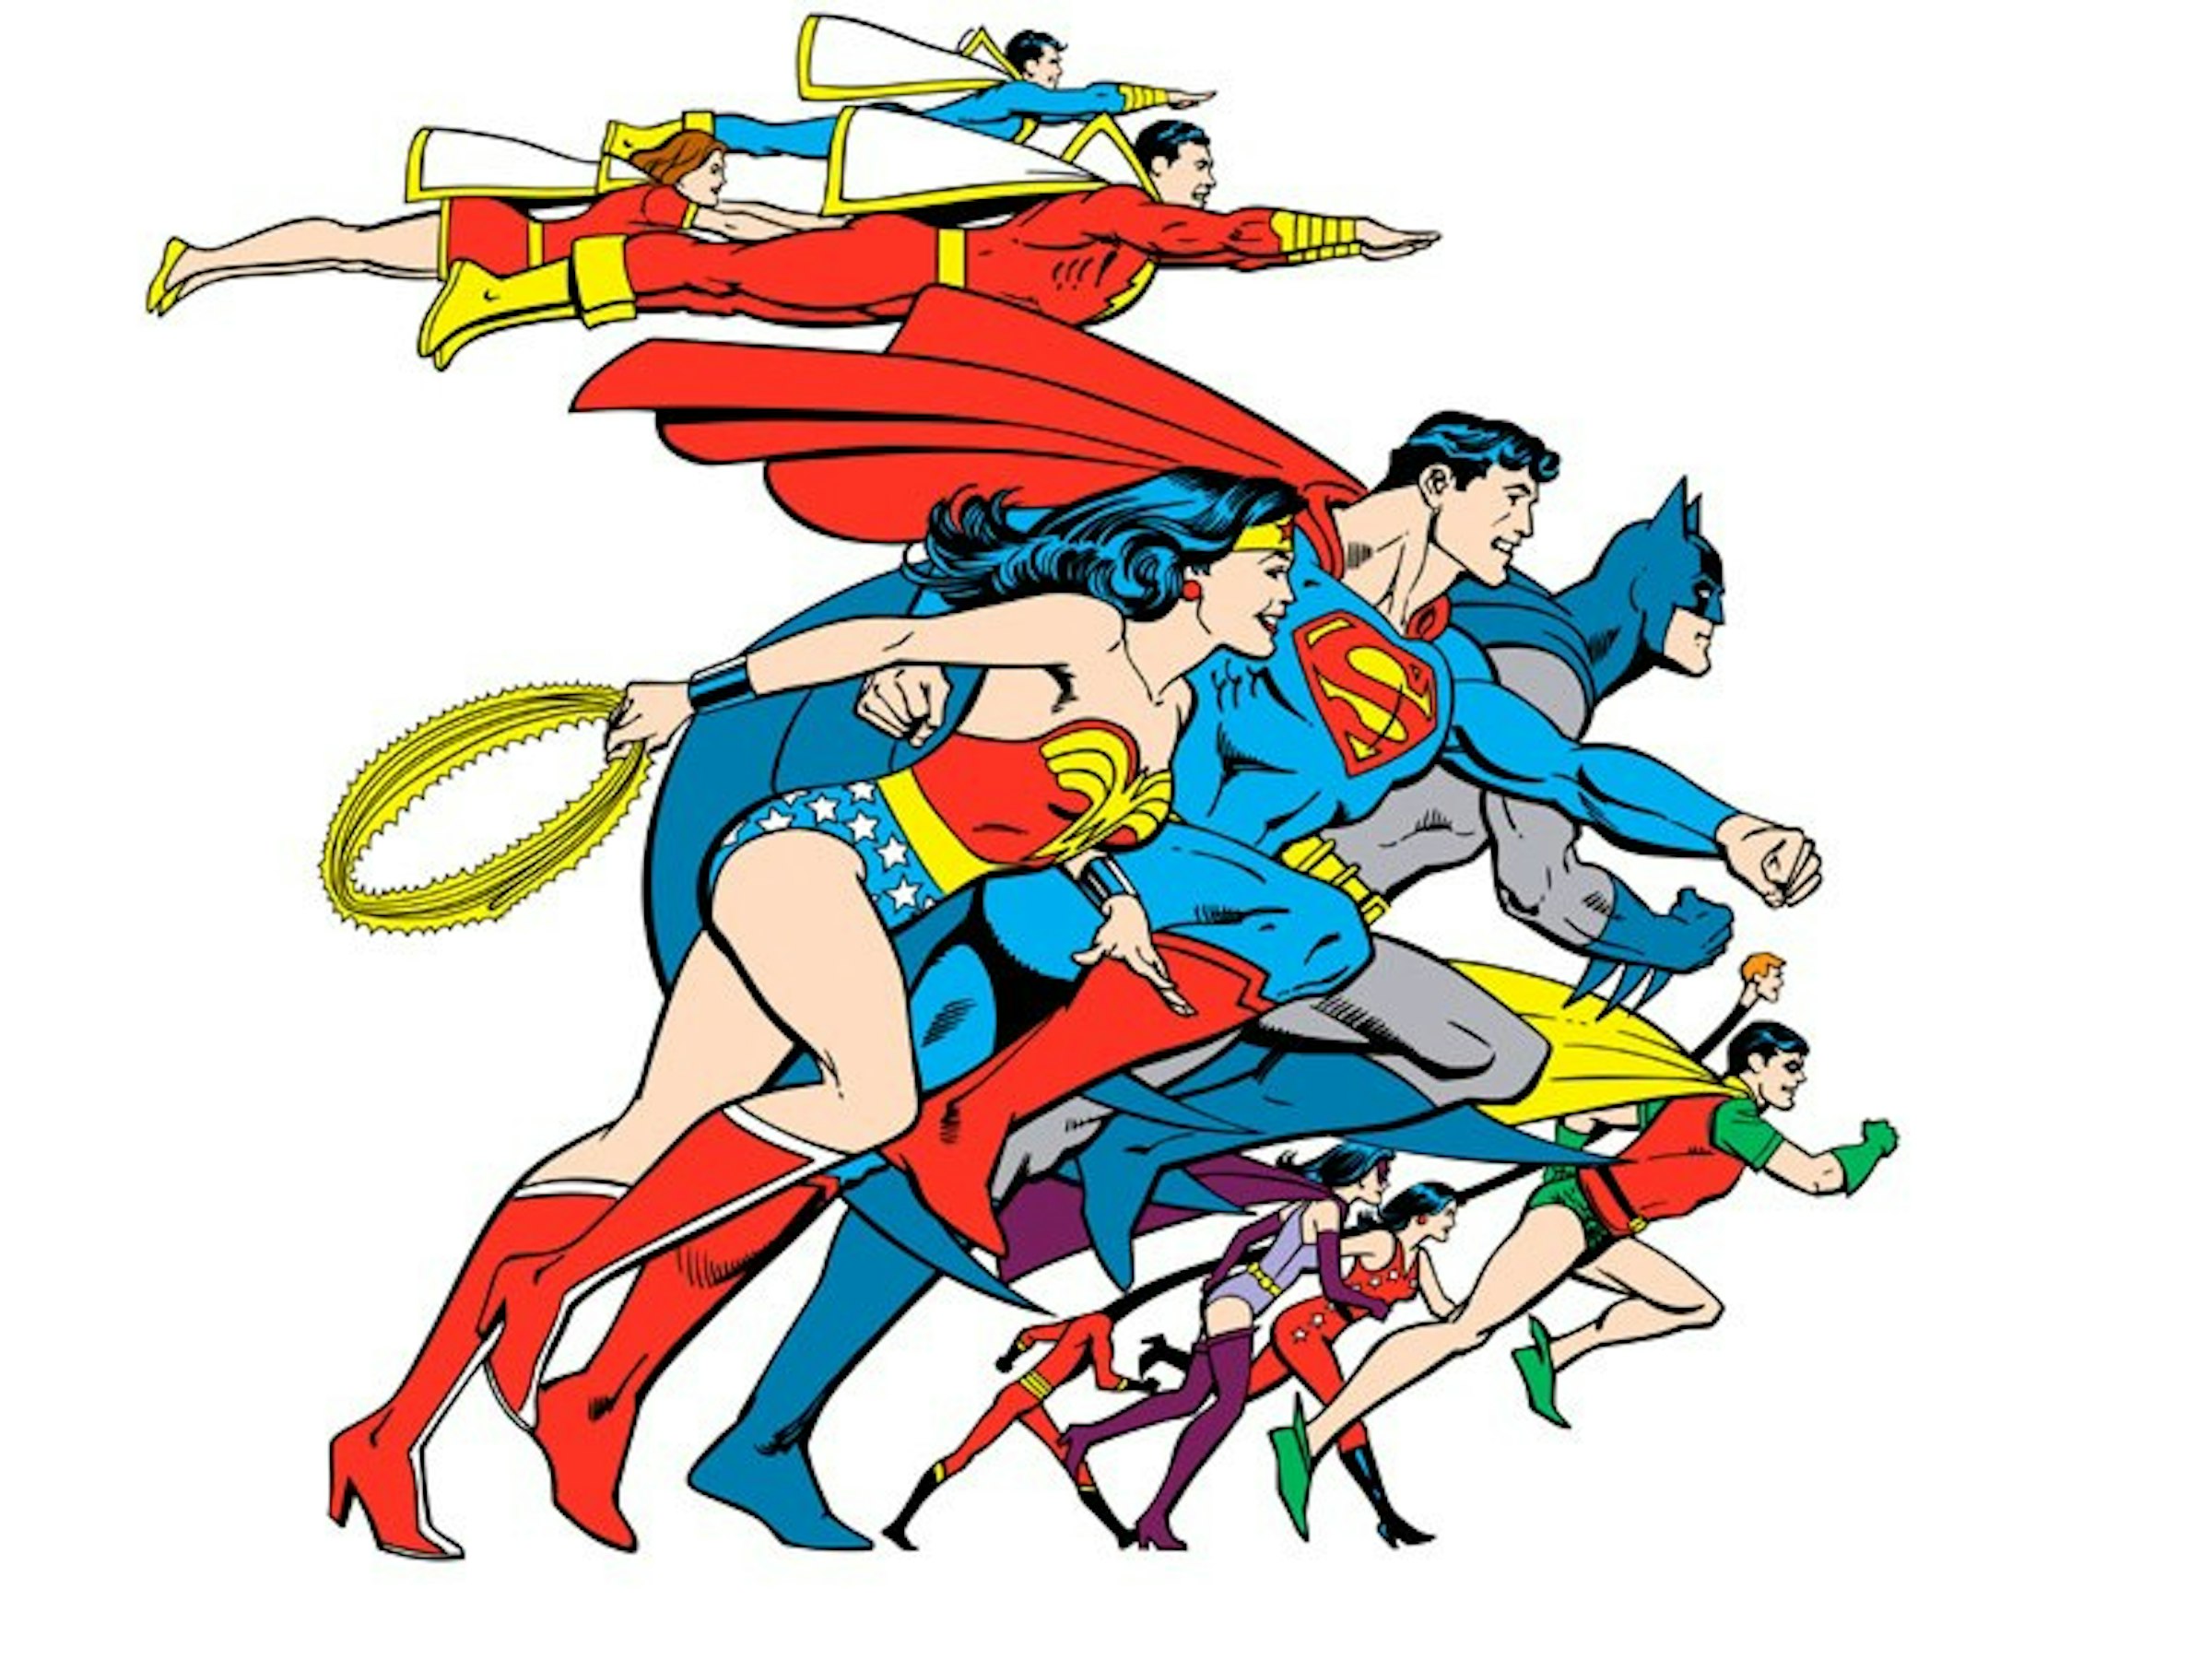 Cockham superheroes. Jose Luis Garcia Lopez комиксы. Супергерои. Персонажи супергероев. Комиксы Супергерои.